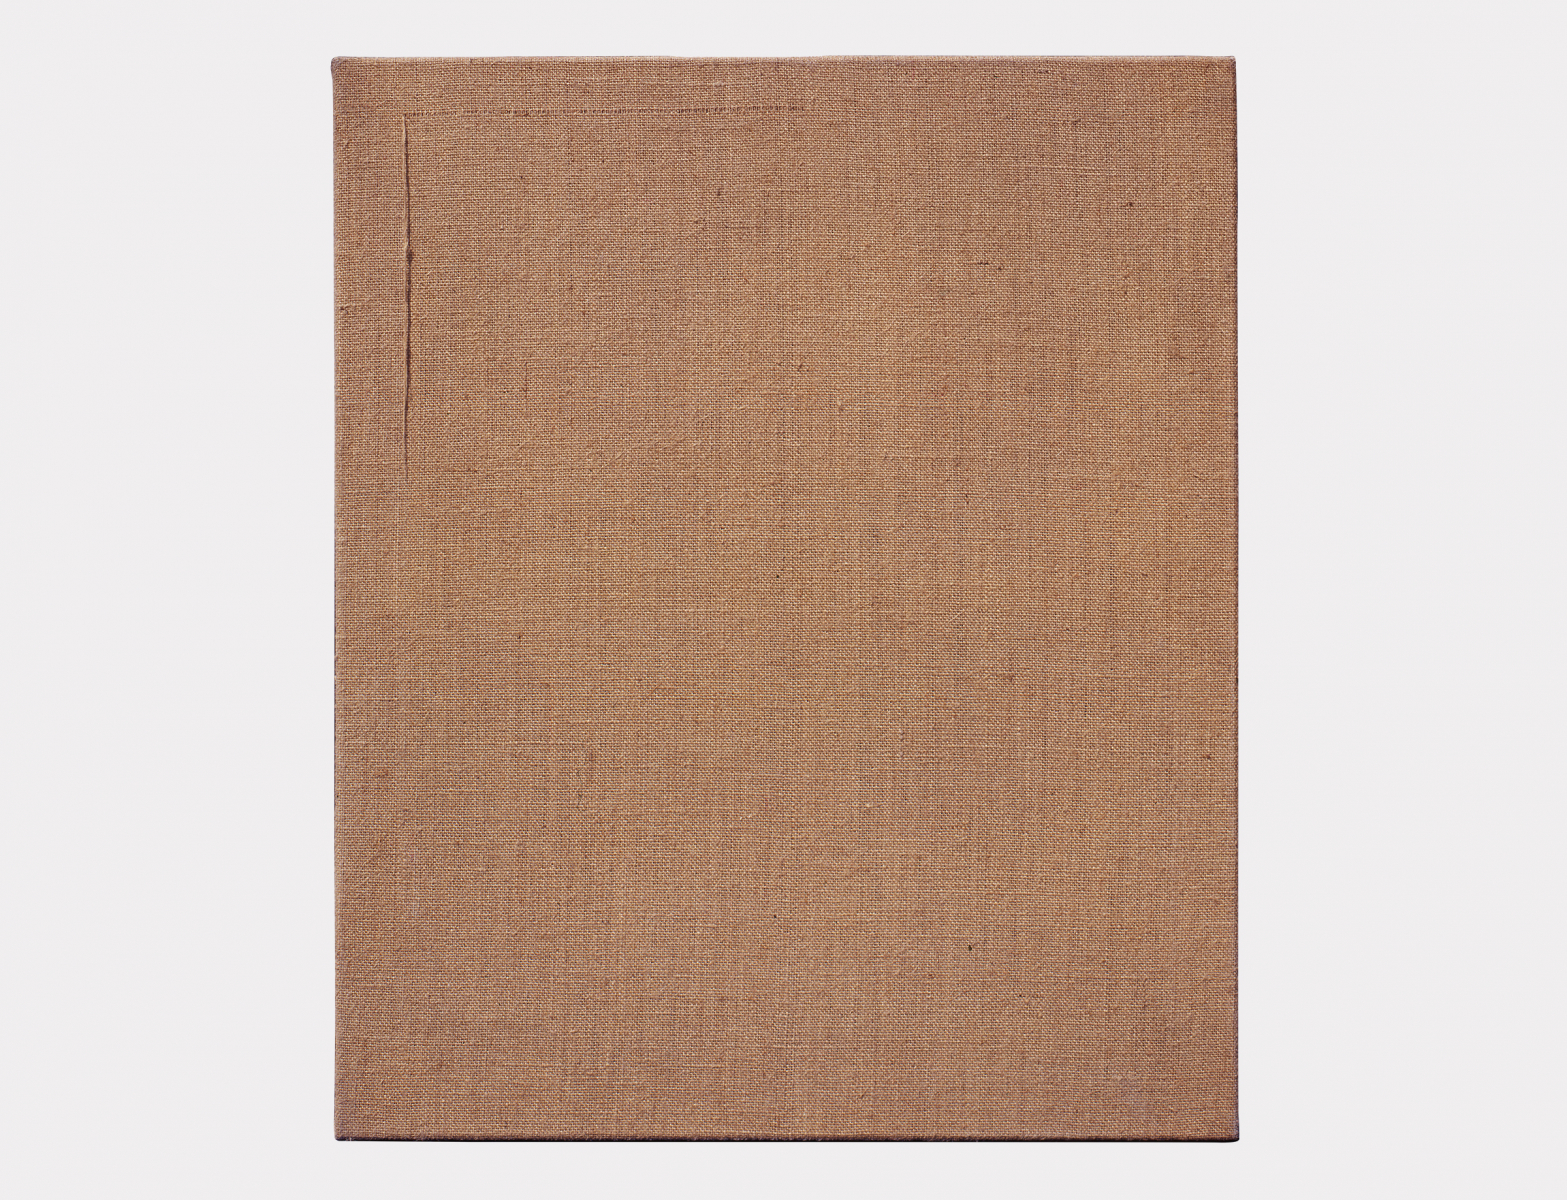 Untitled-7563, 1975, Hemp Cloth, 72.3x61cm